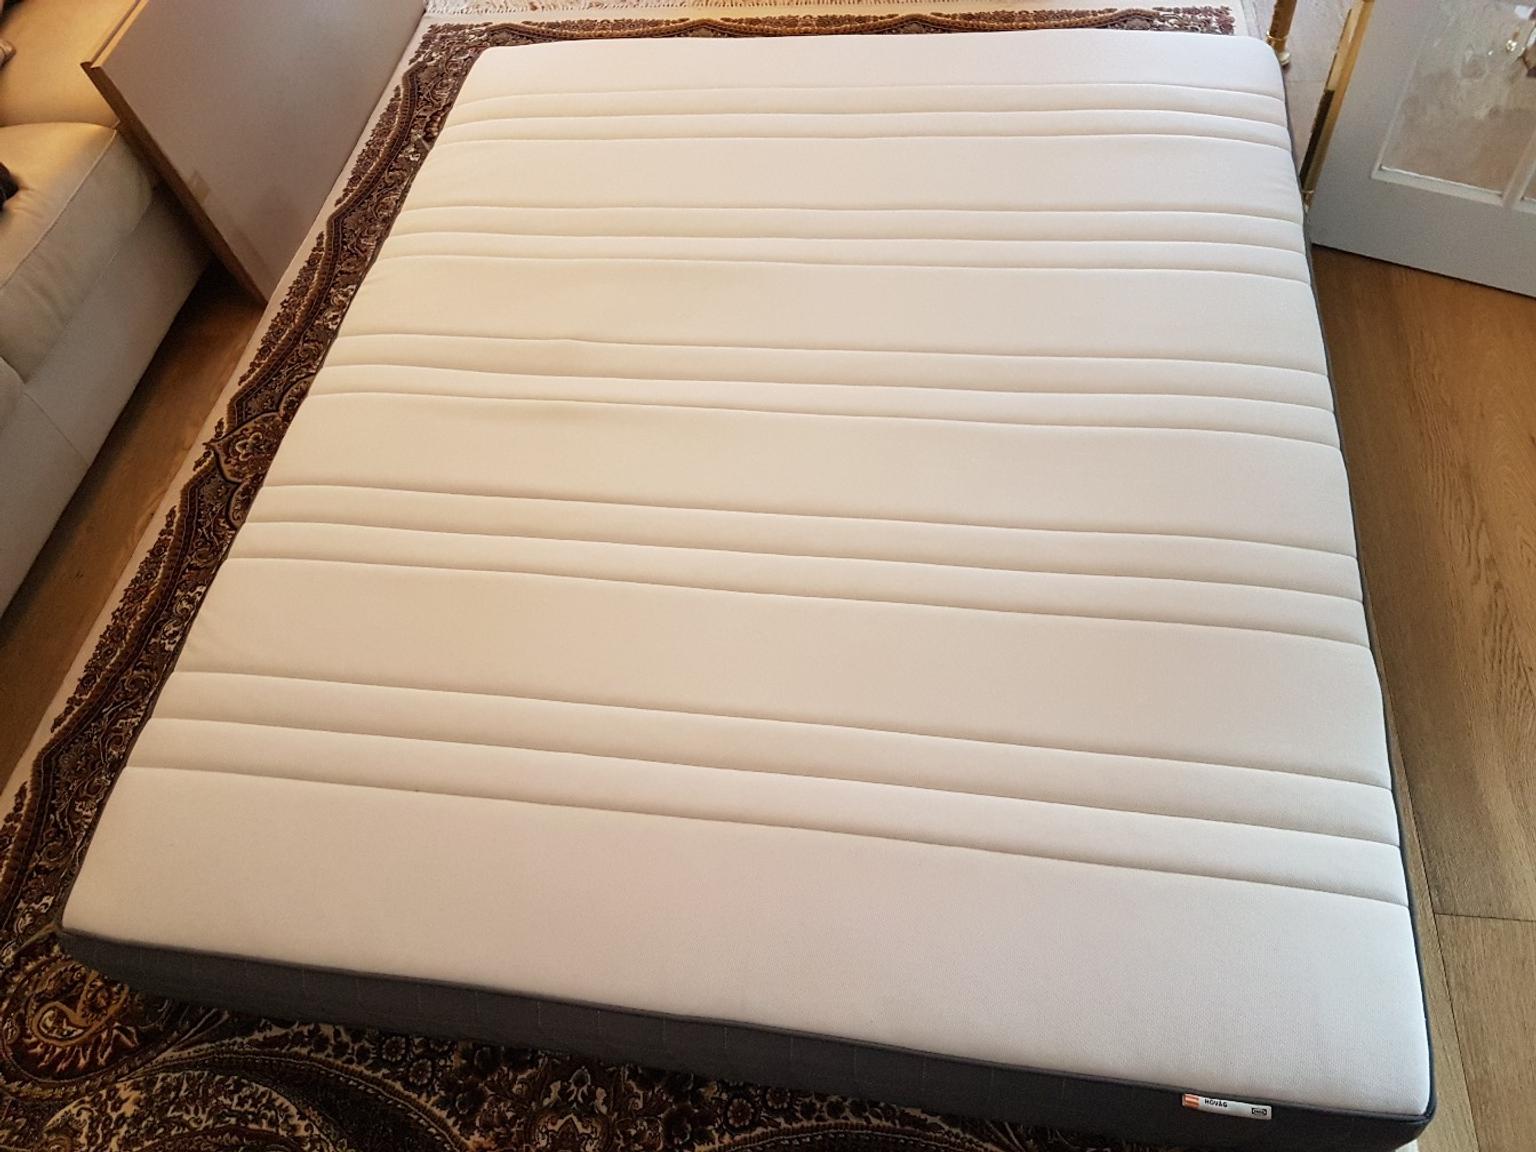 hövåg pocket sprung mattress medium firm review